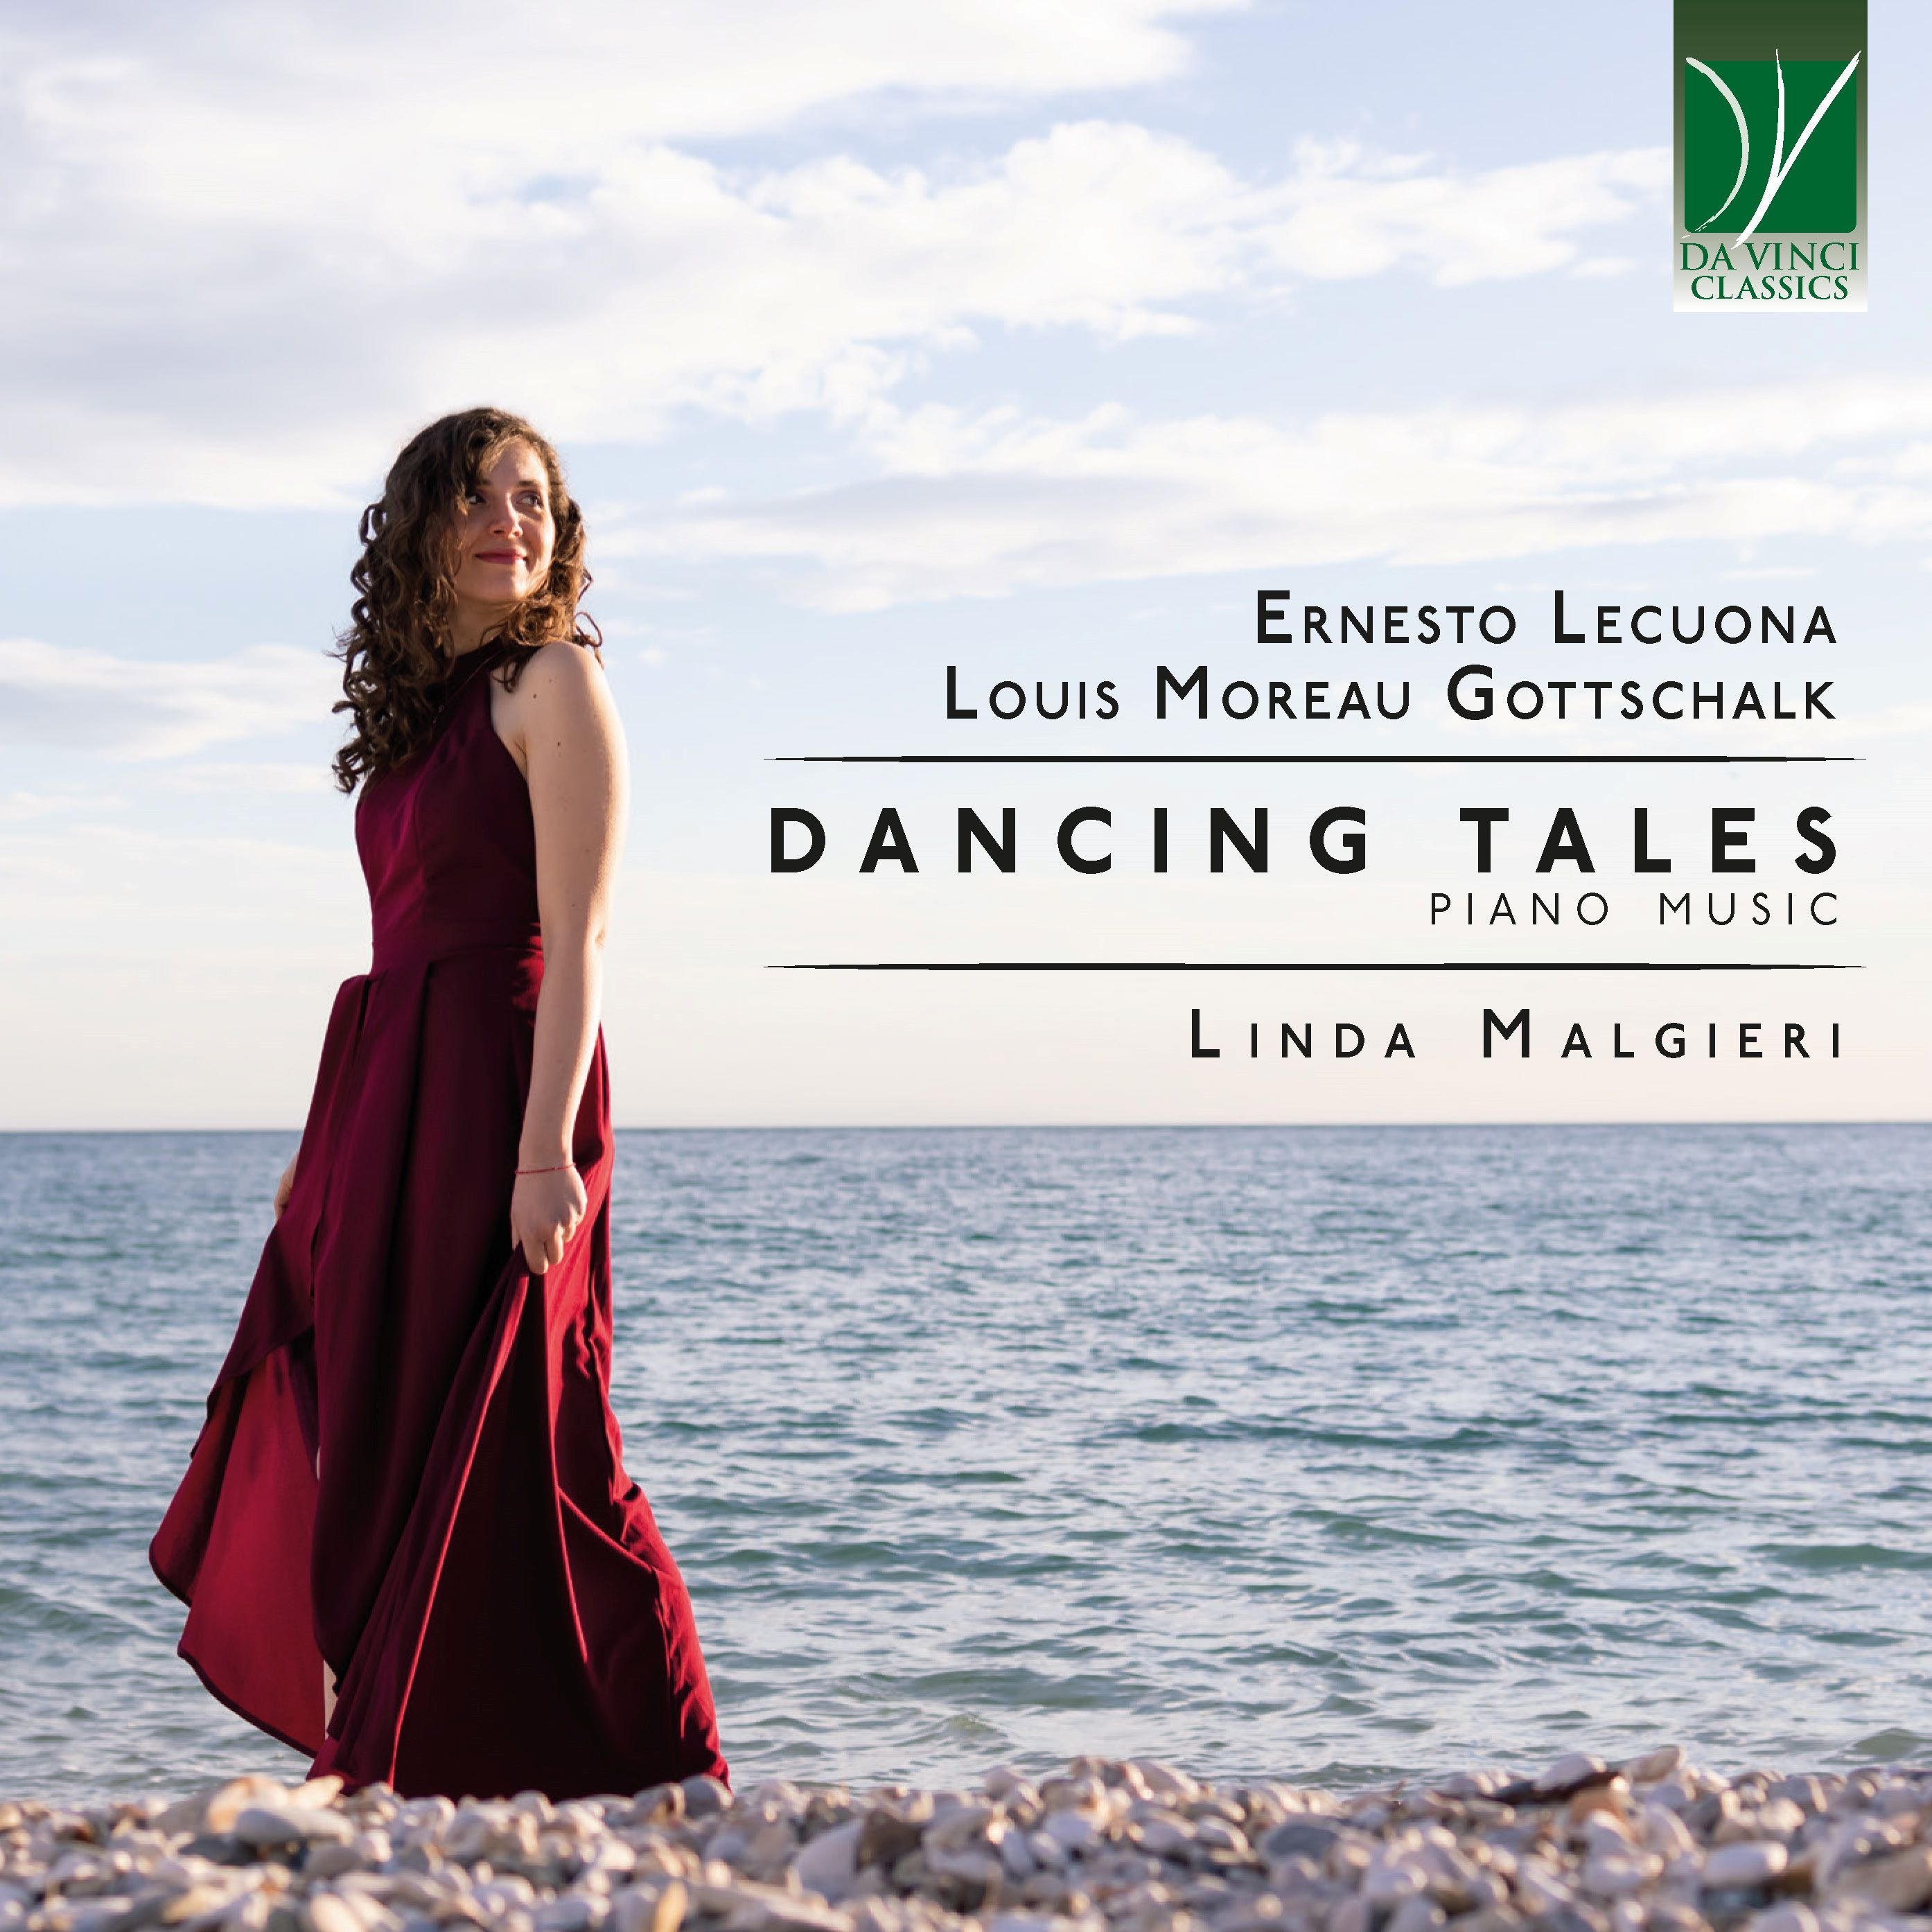 ERNESTO LECUONA, LOUIS MOREAU GOTTSCHALK: DANCING TALES, PIANO MUSIC